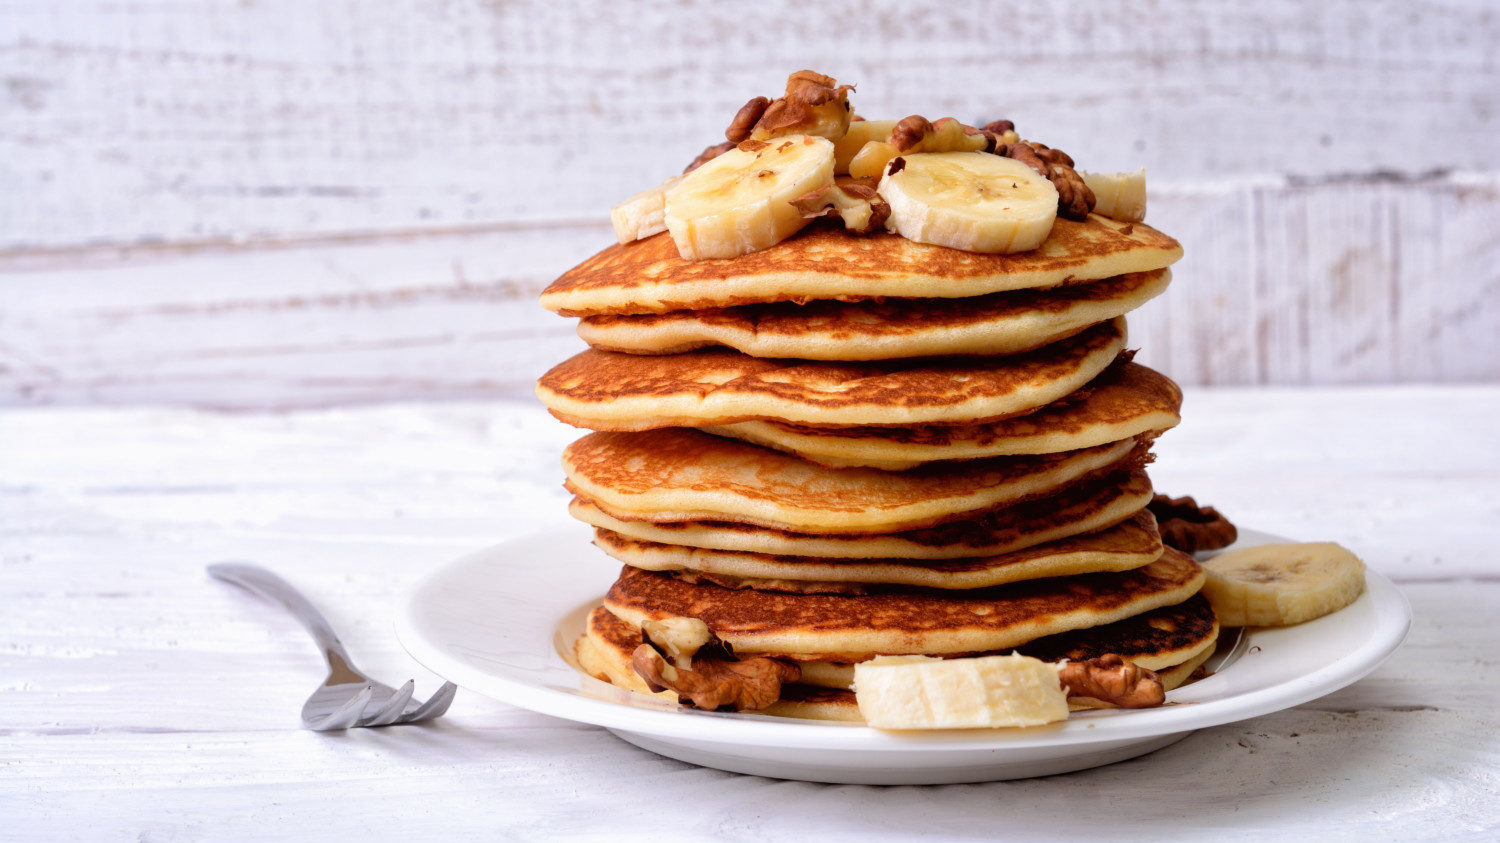 Pancakes with banana and walnuts